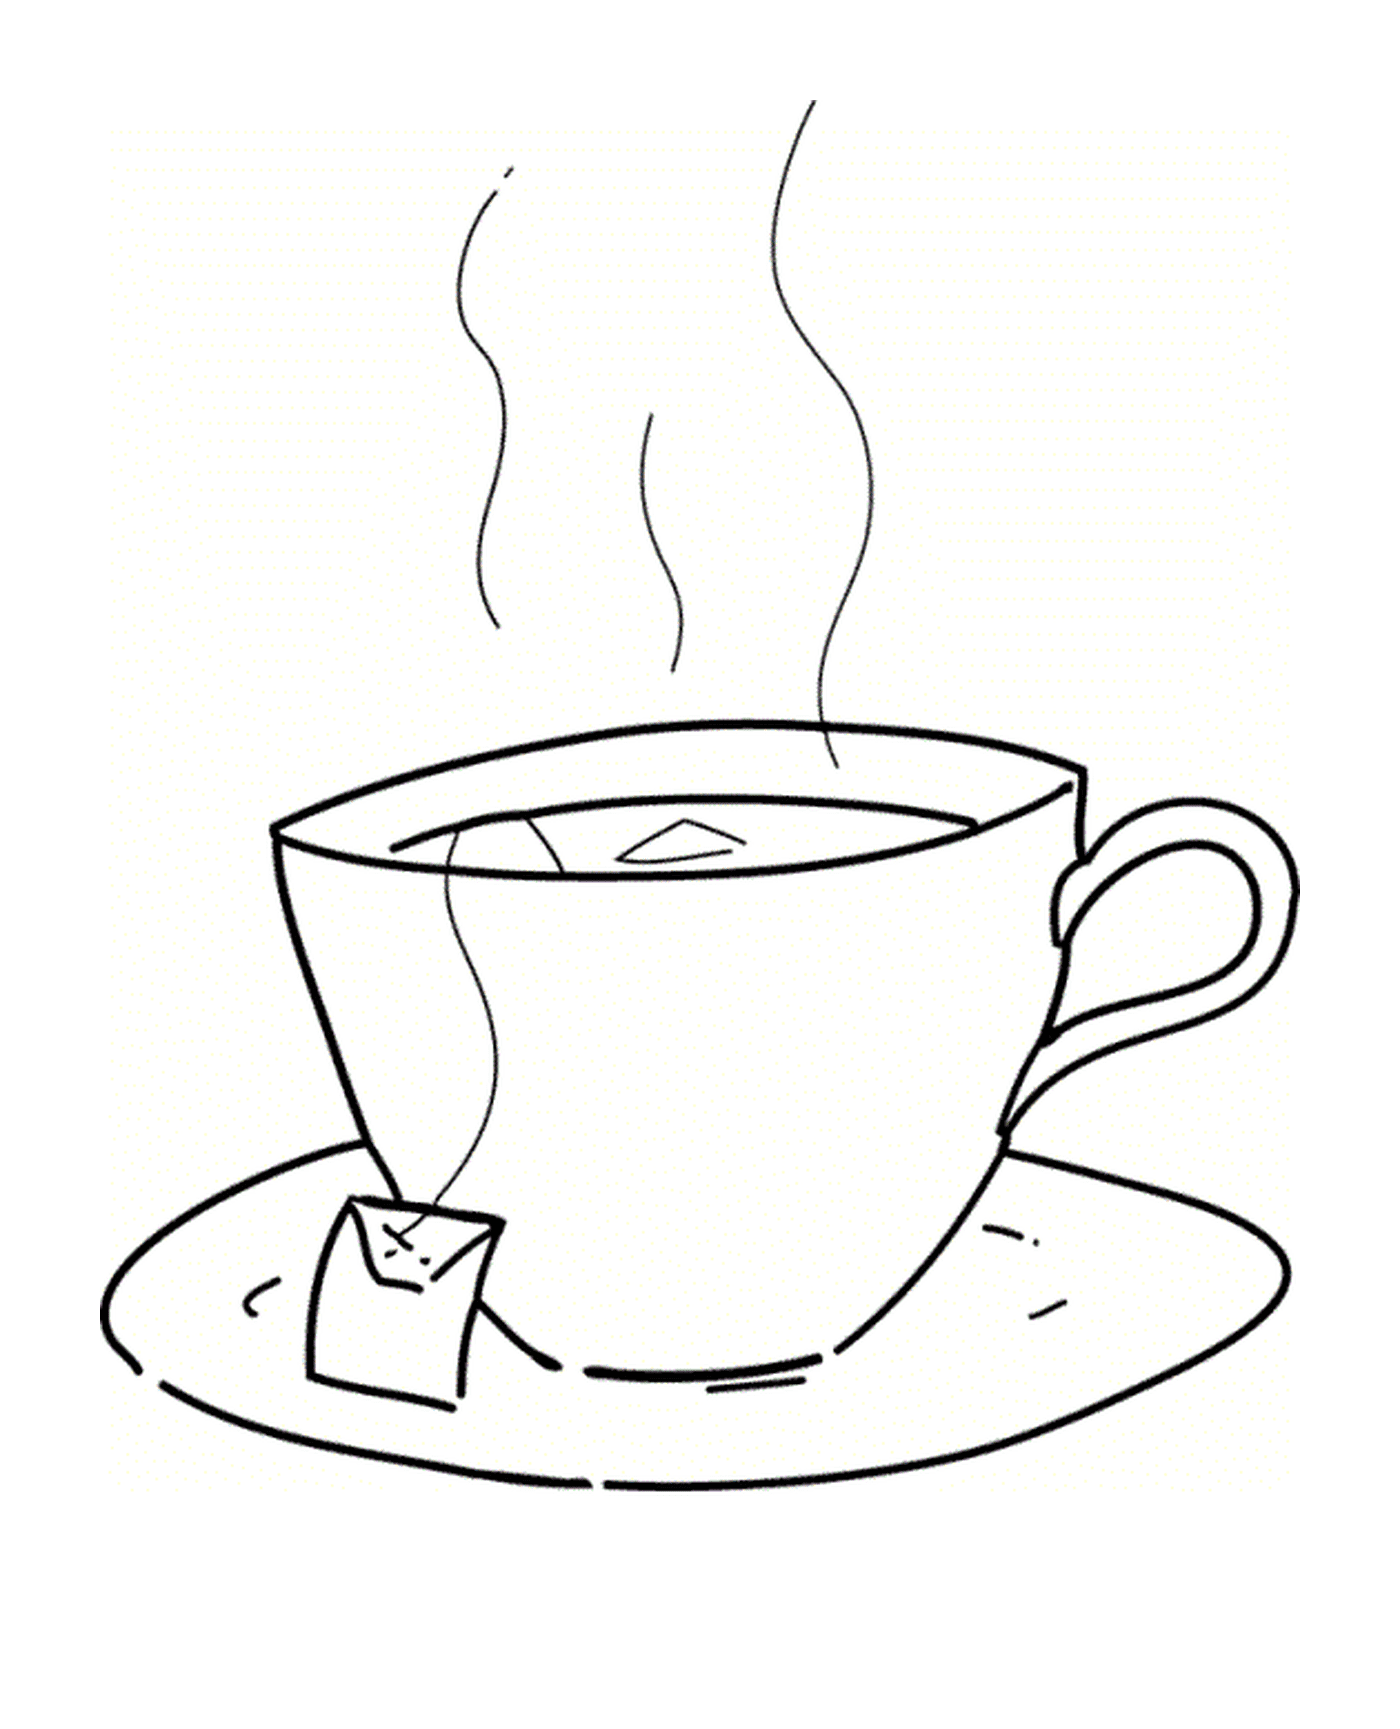  A cup of tea 